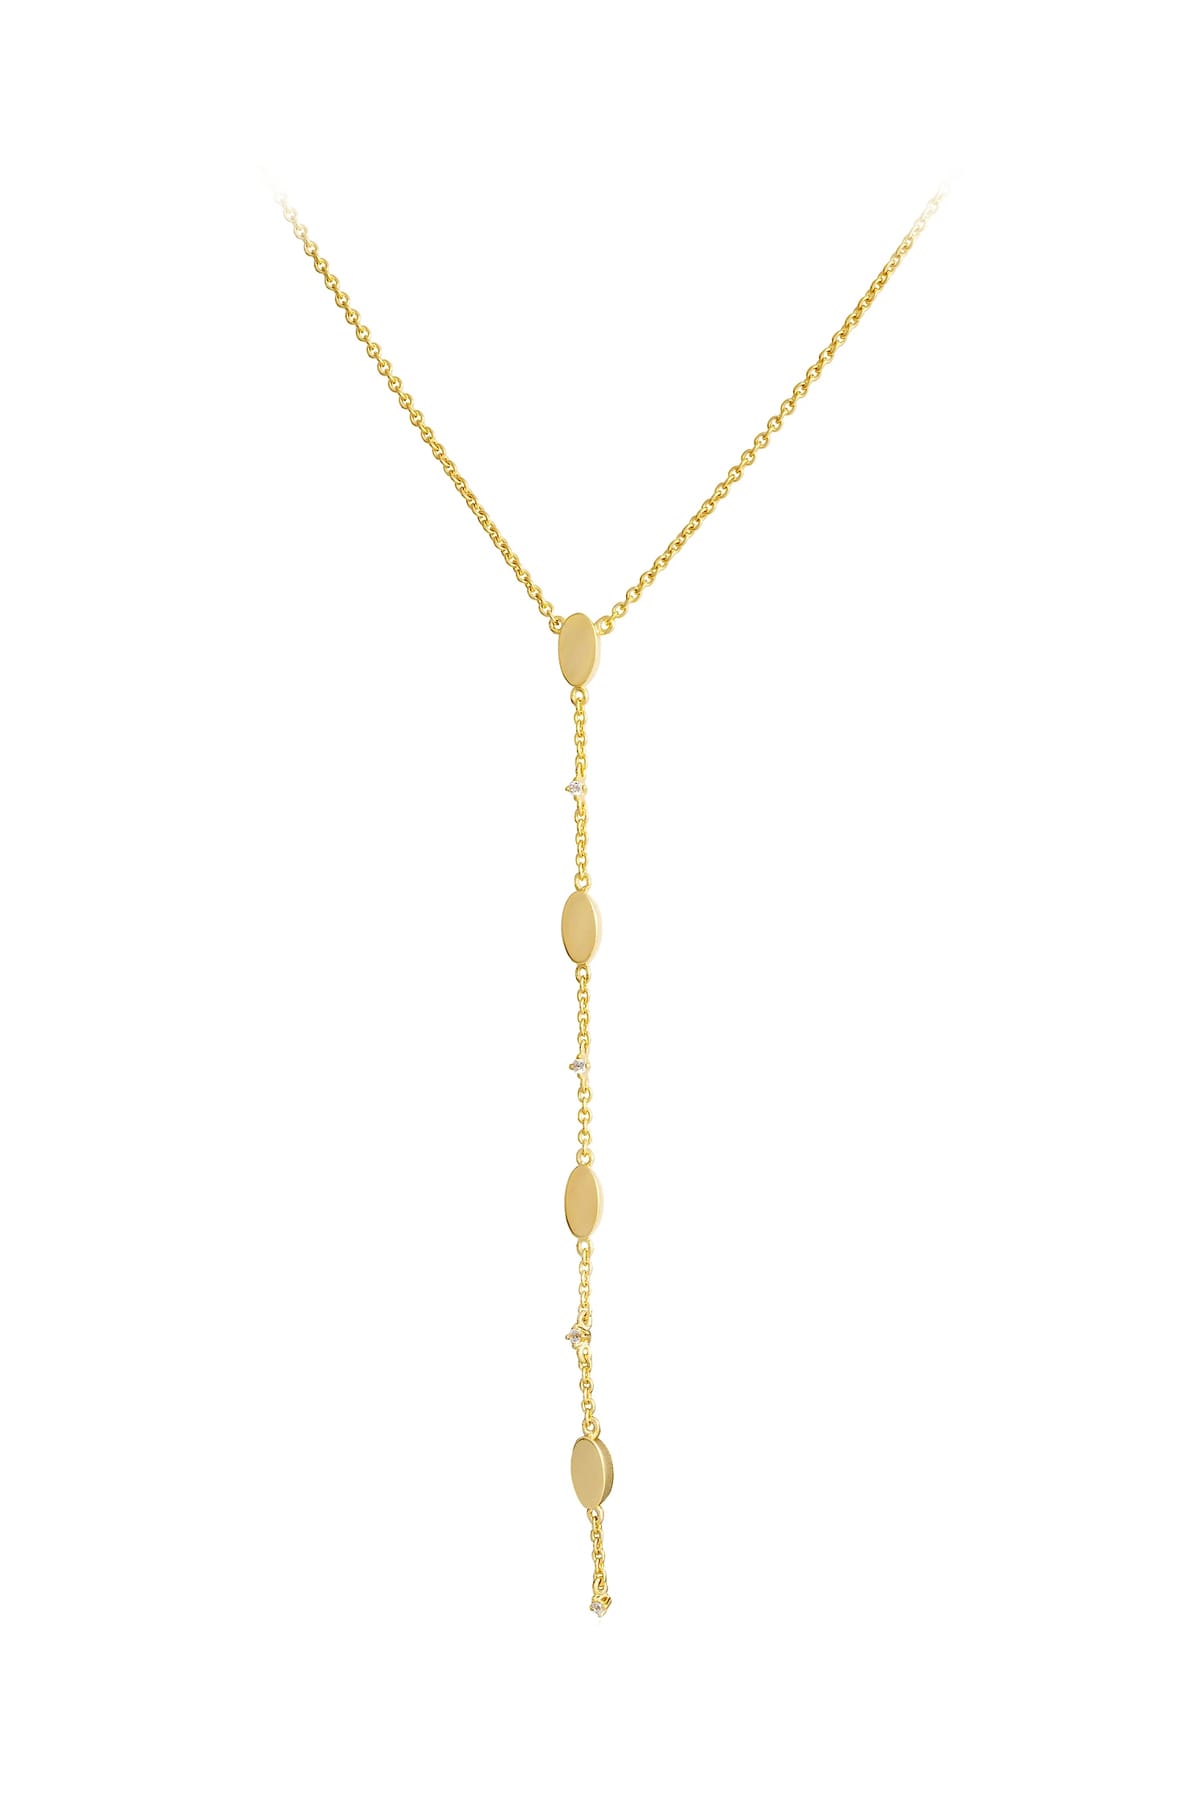 9 Carat Yellow Gold Diamond Necklet available at LeGassick Diamonds and Jewellery Gold Coast, Australia.